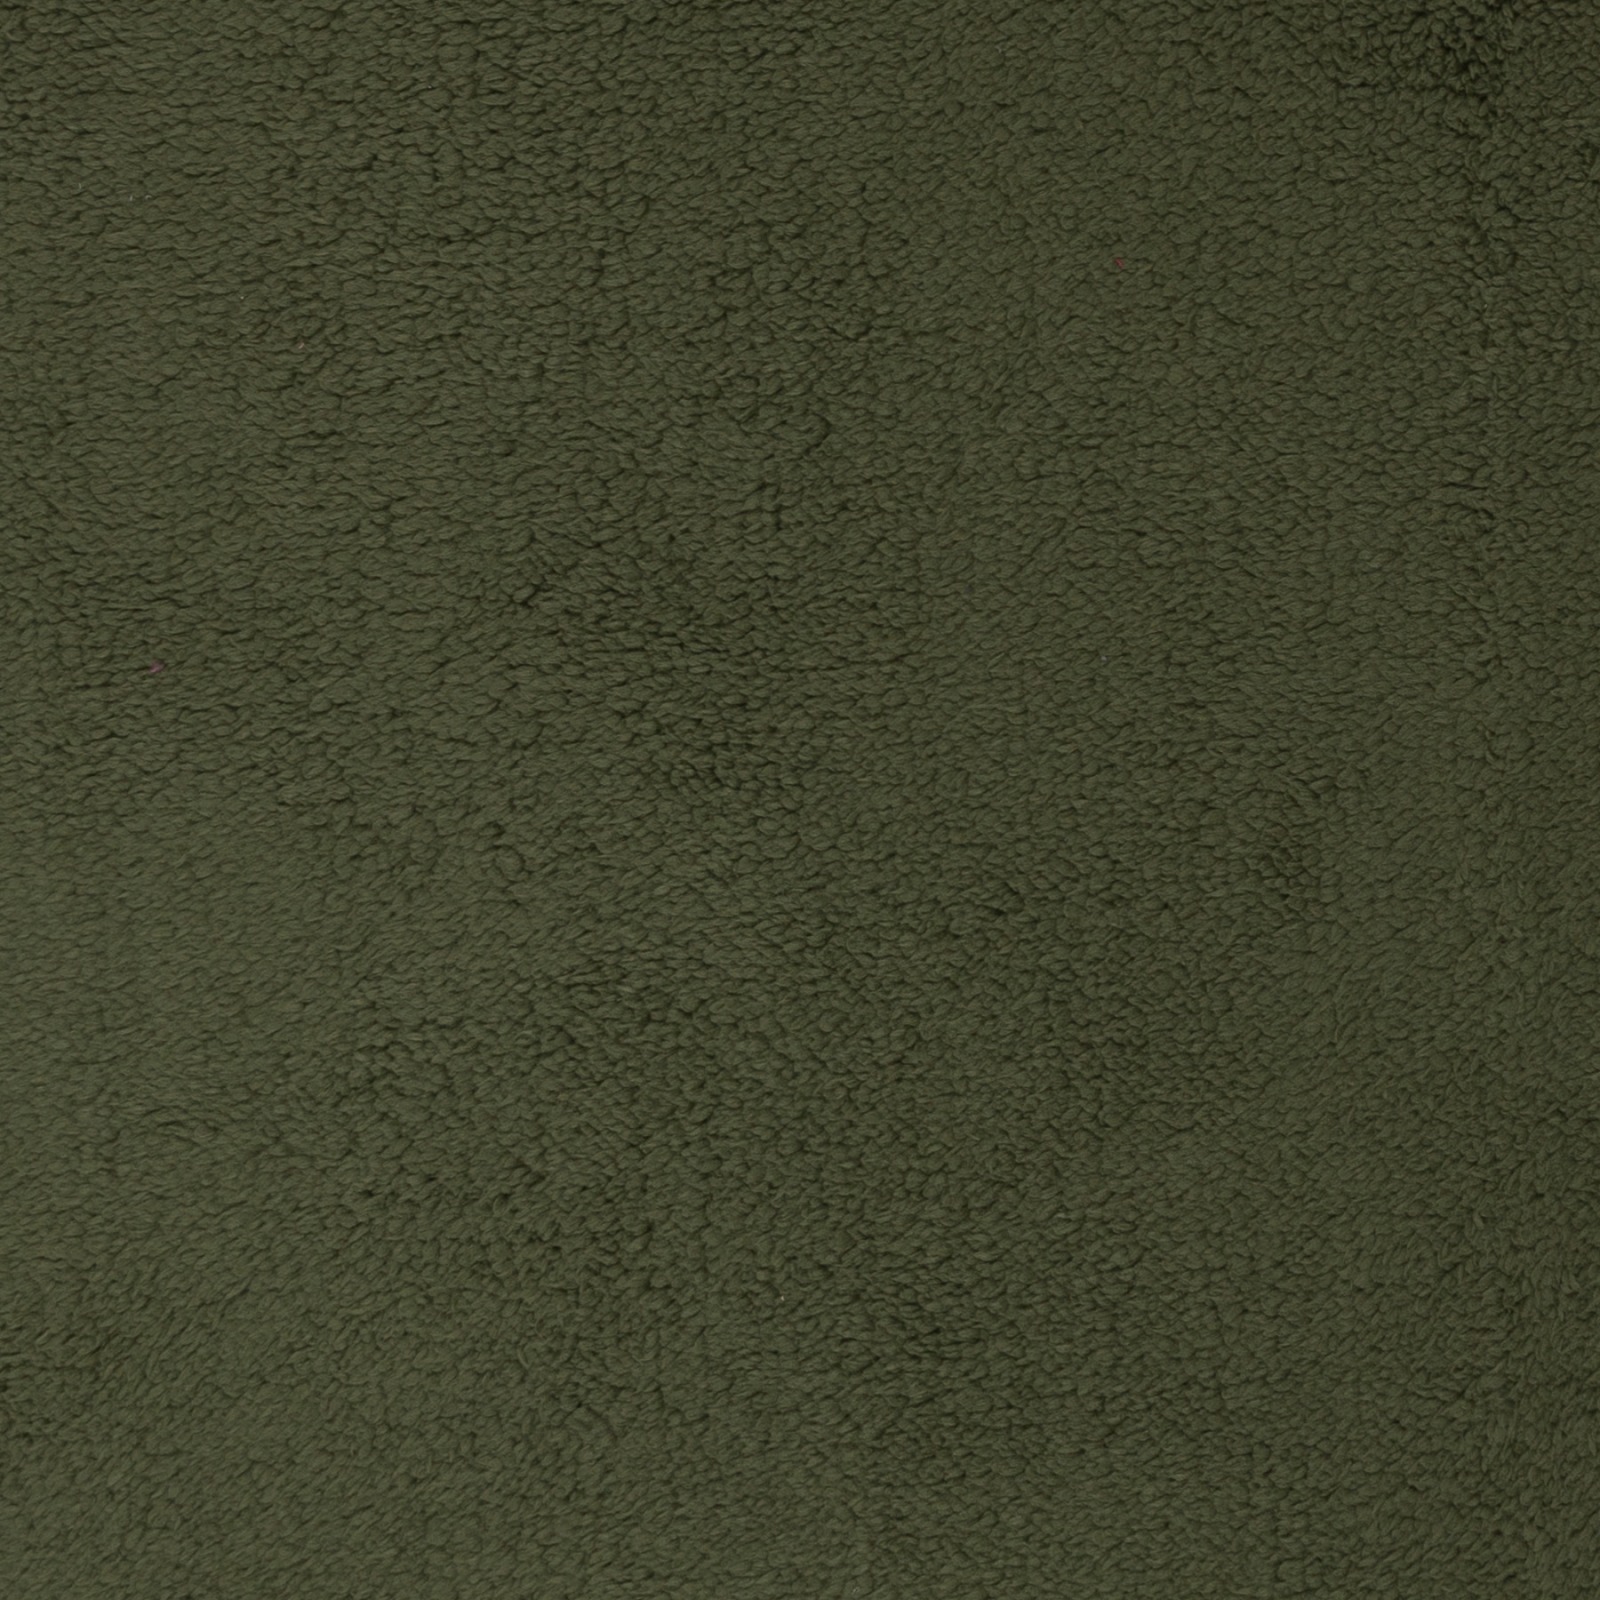 Doubleface Fleece Tamme 1450 Eur/m olivgrün khaki 5